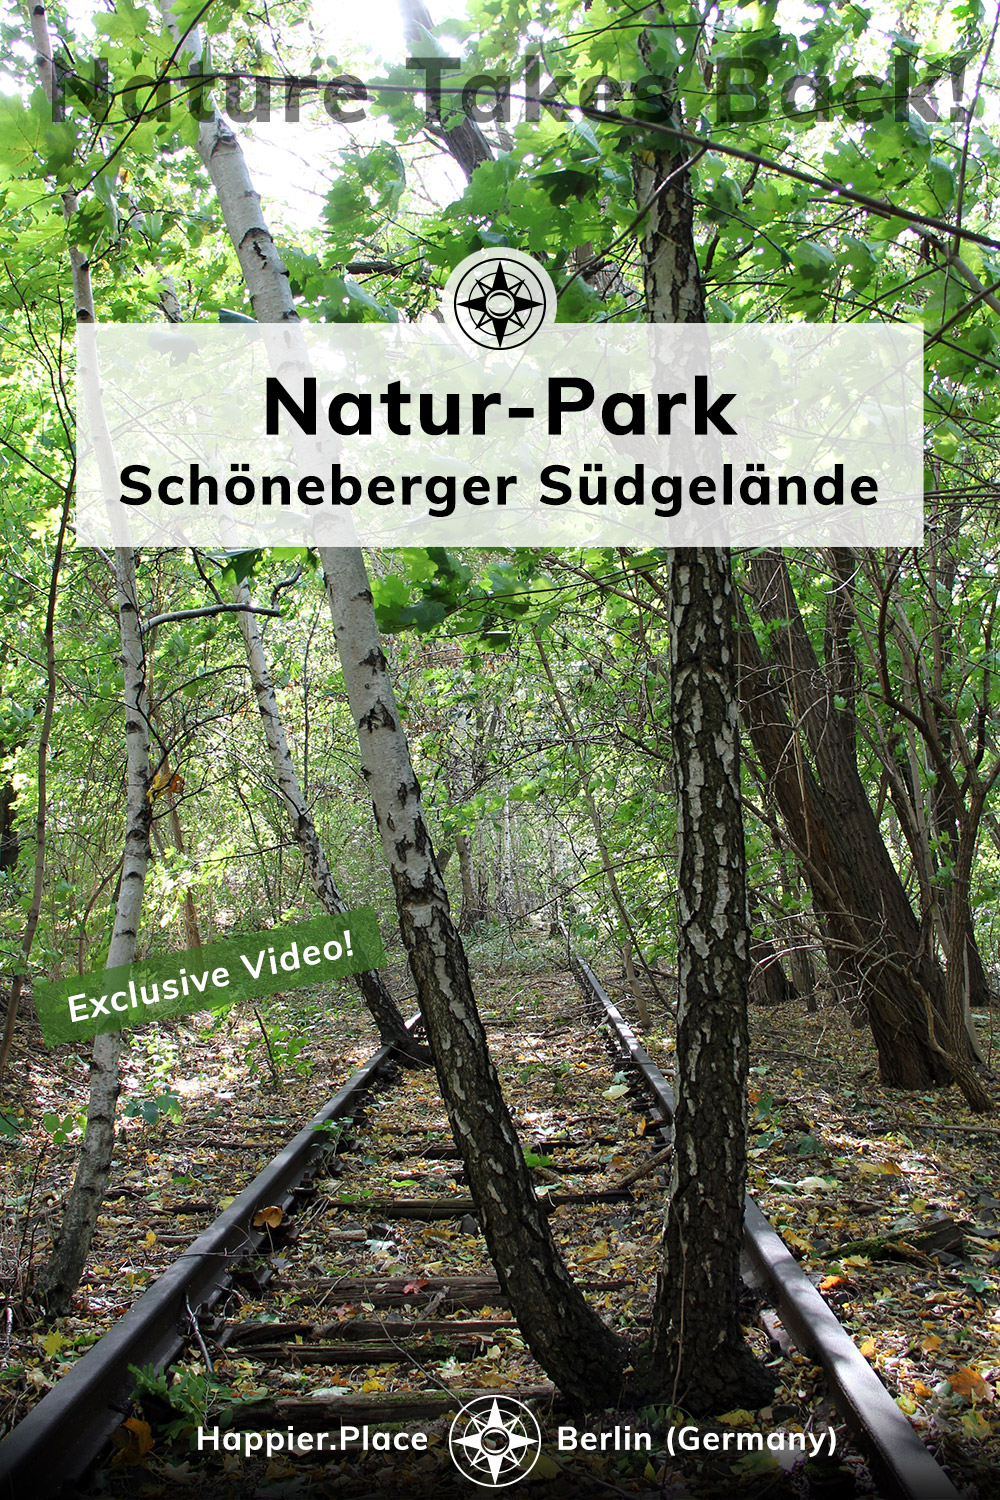 Natur-Park Schoeneberger Suedgelaende, Berlin, Germany, Happier Place, nature takes back, video